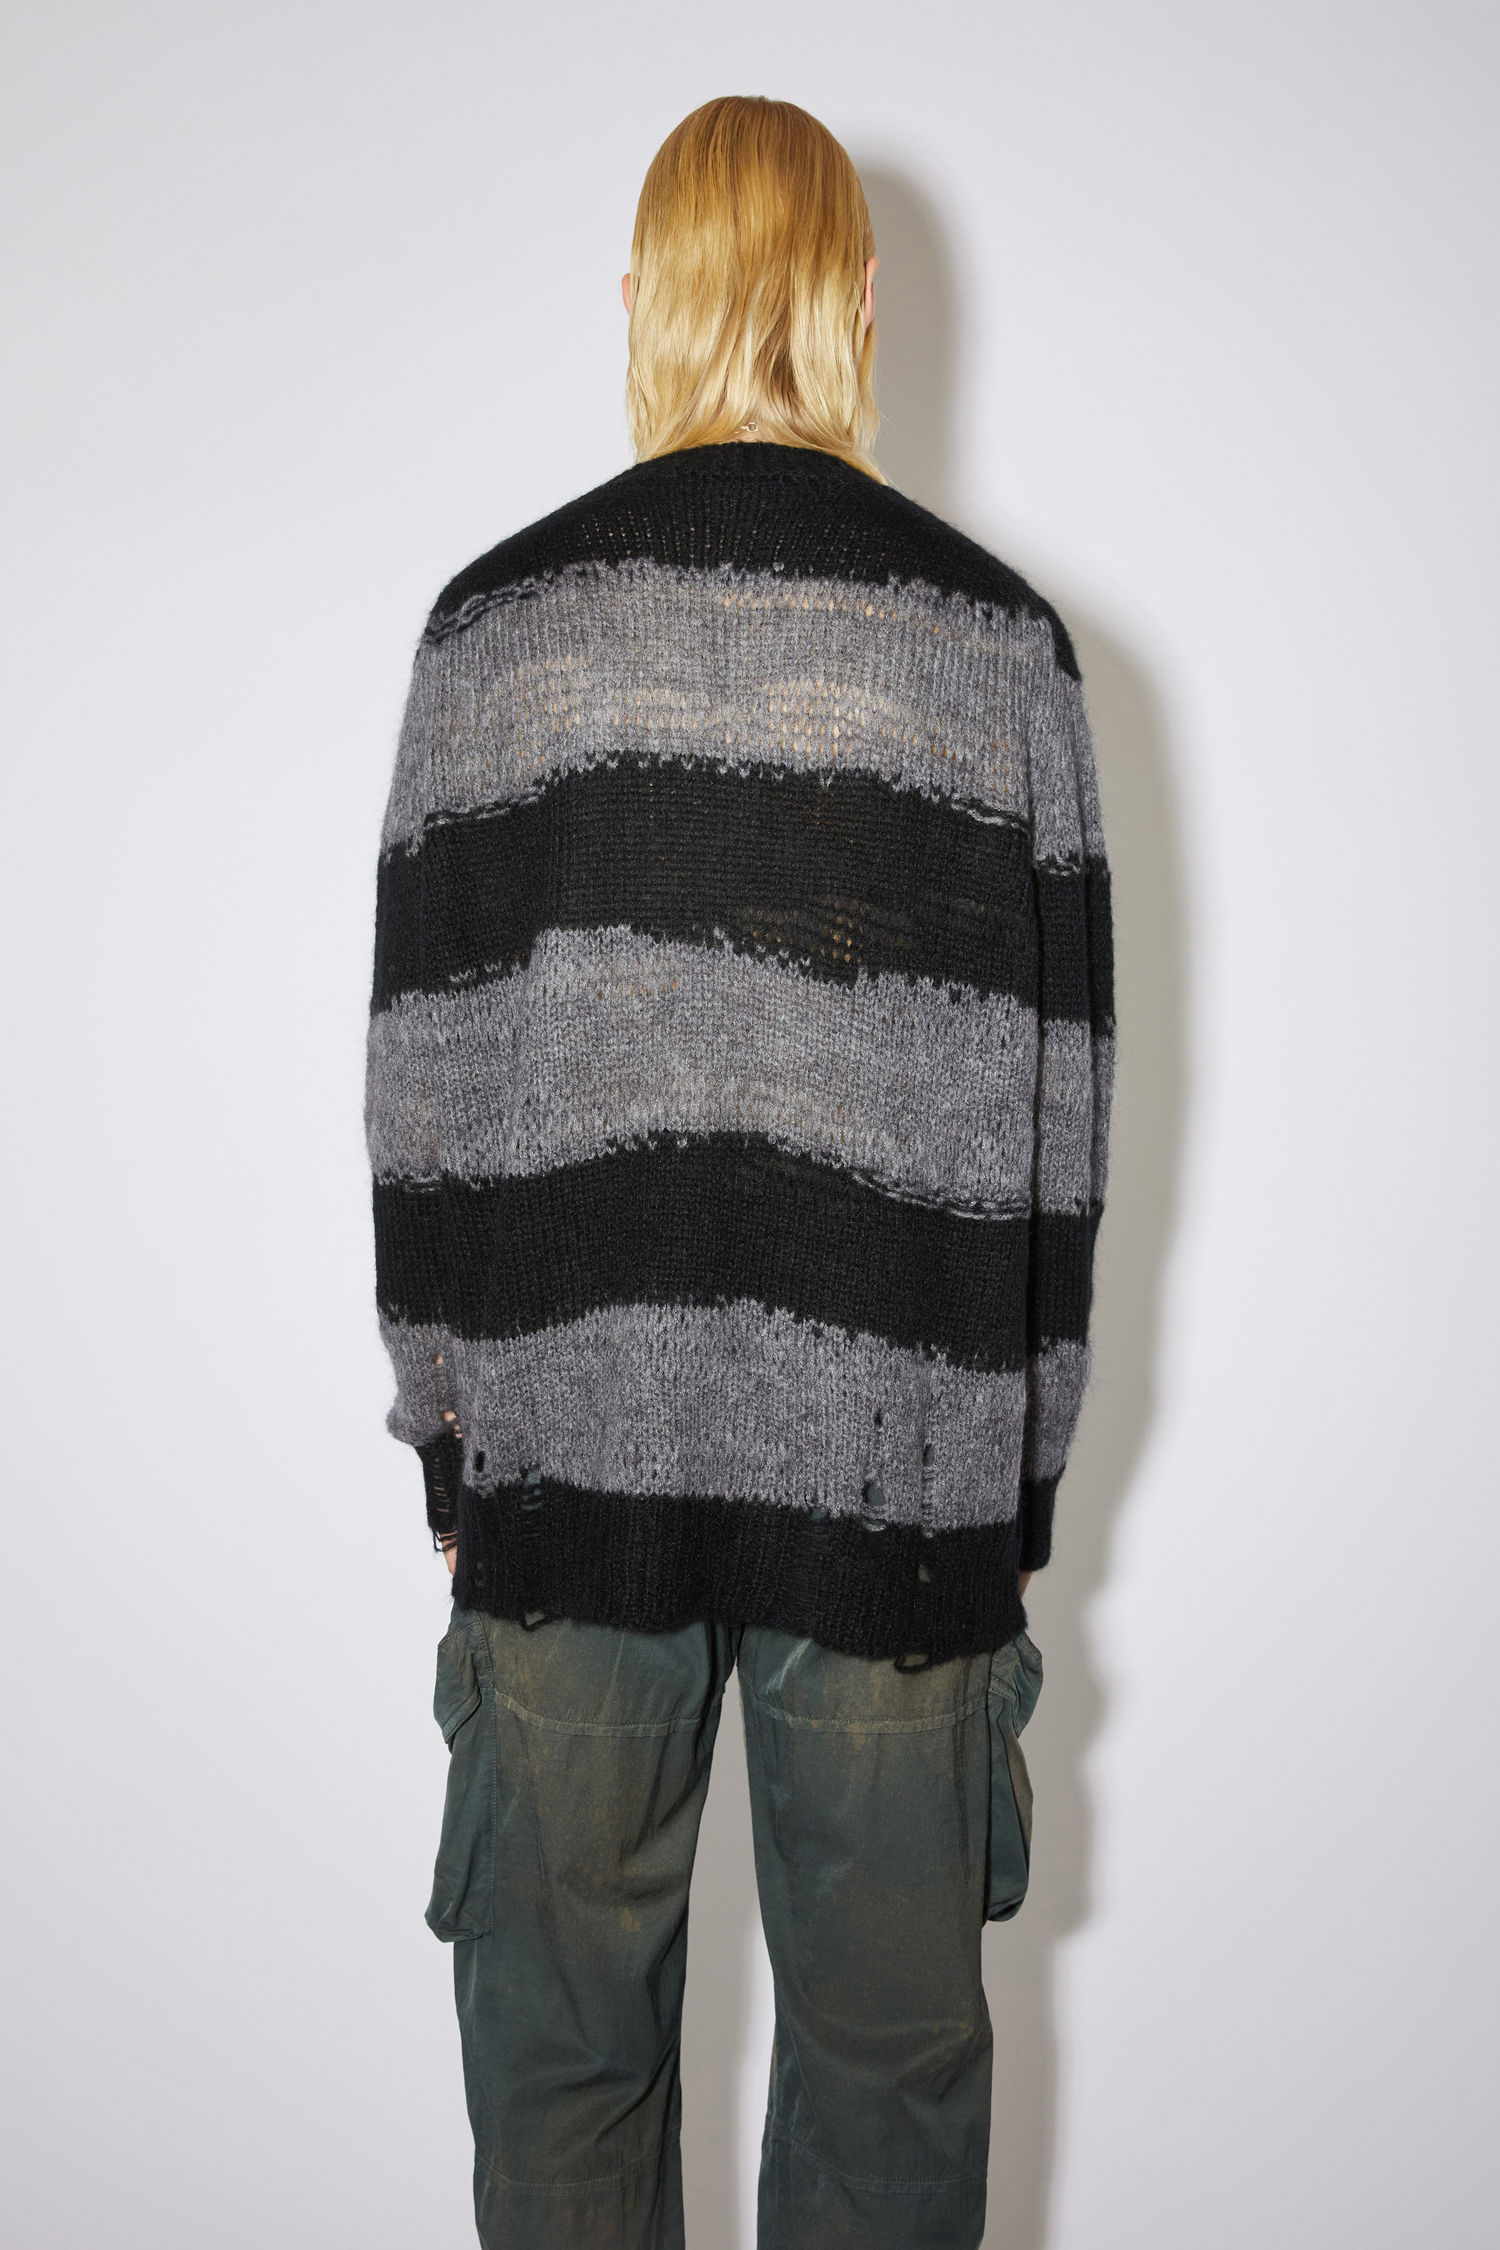 Acne Studios - Distressed striped sweater - Grey/black